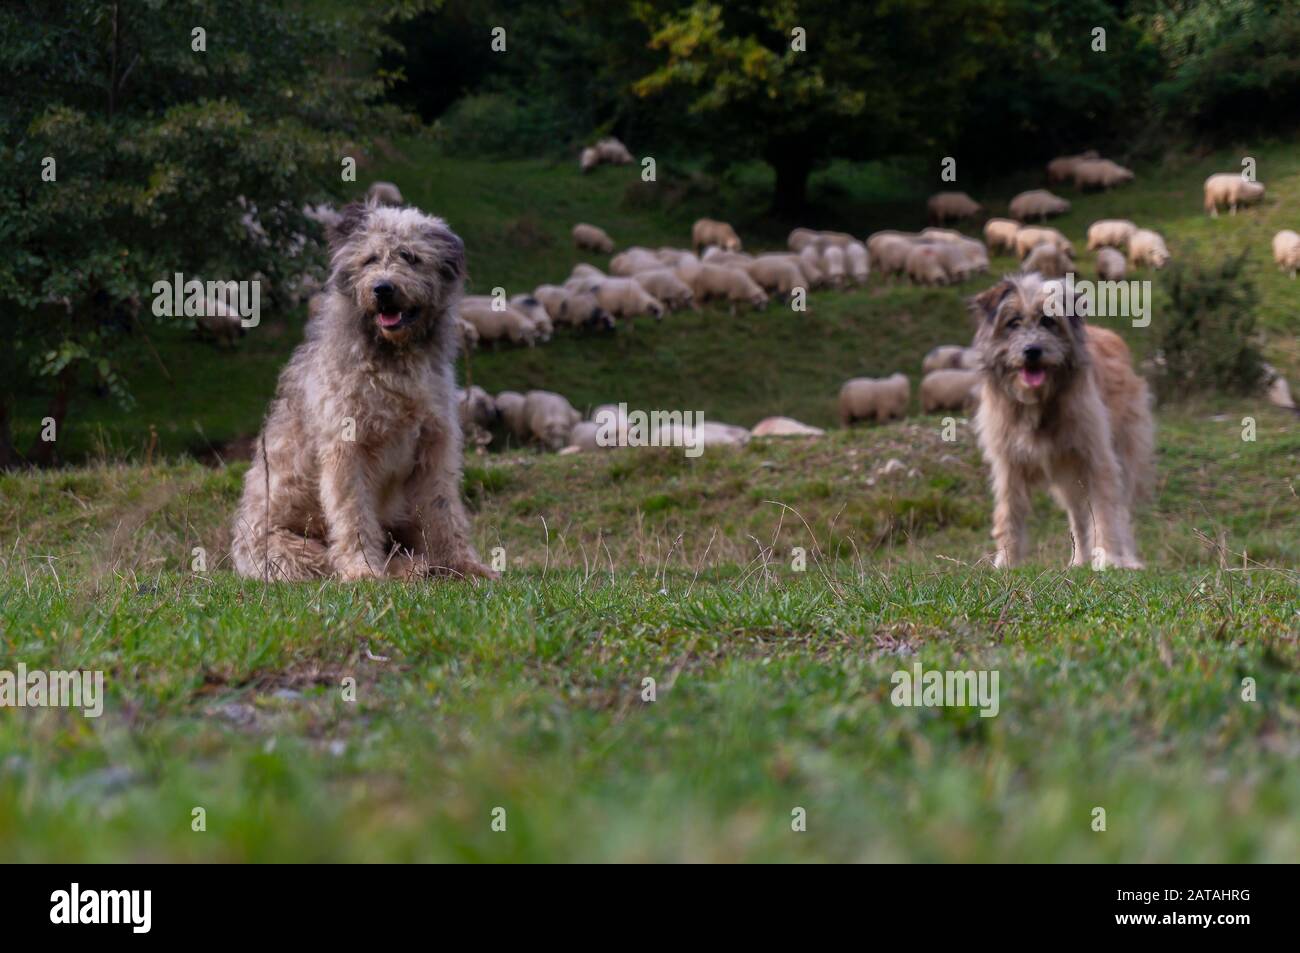 Sheep dogs guard in Carpathian Mountains. Shepherd dog with sheep on a green field Stock Photo